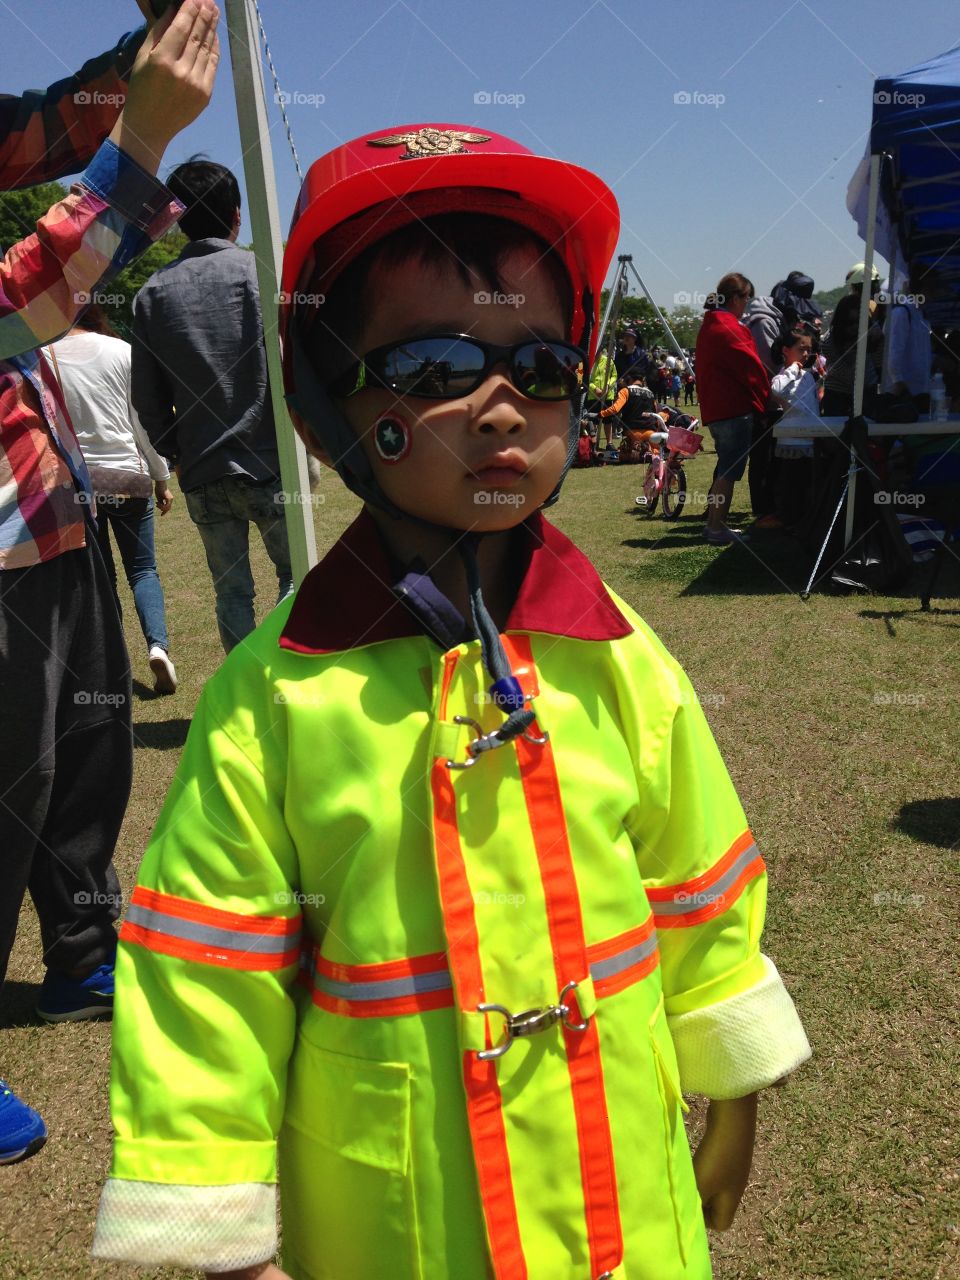 Children's day. Fireman